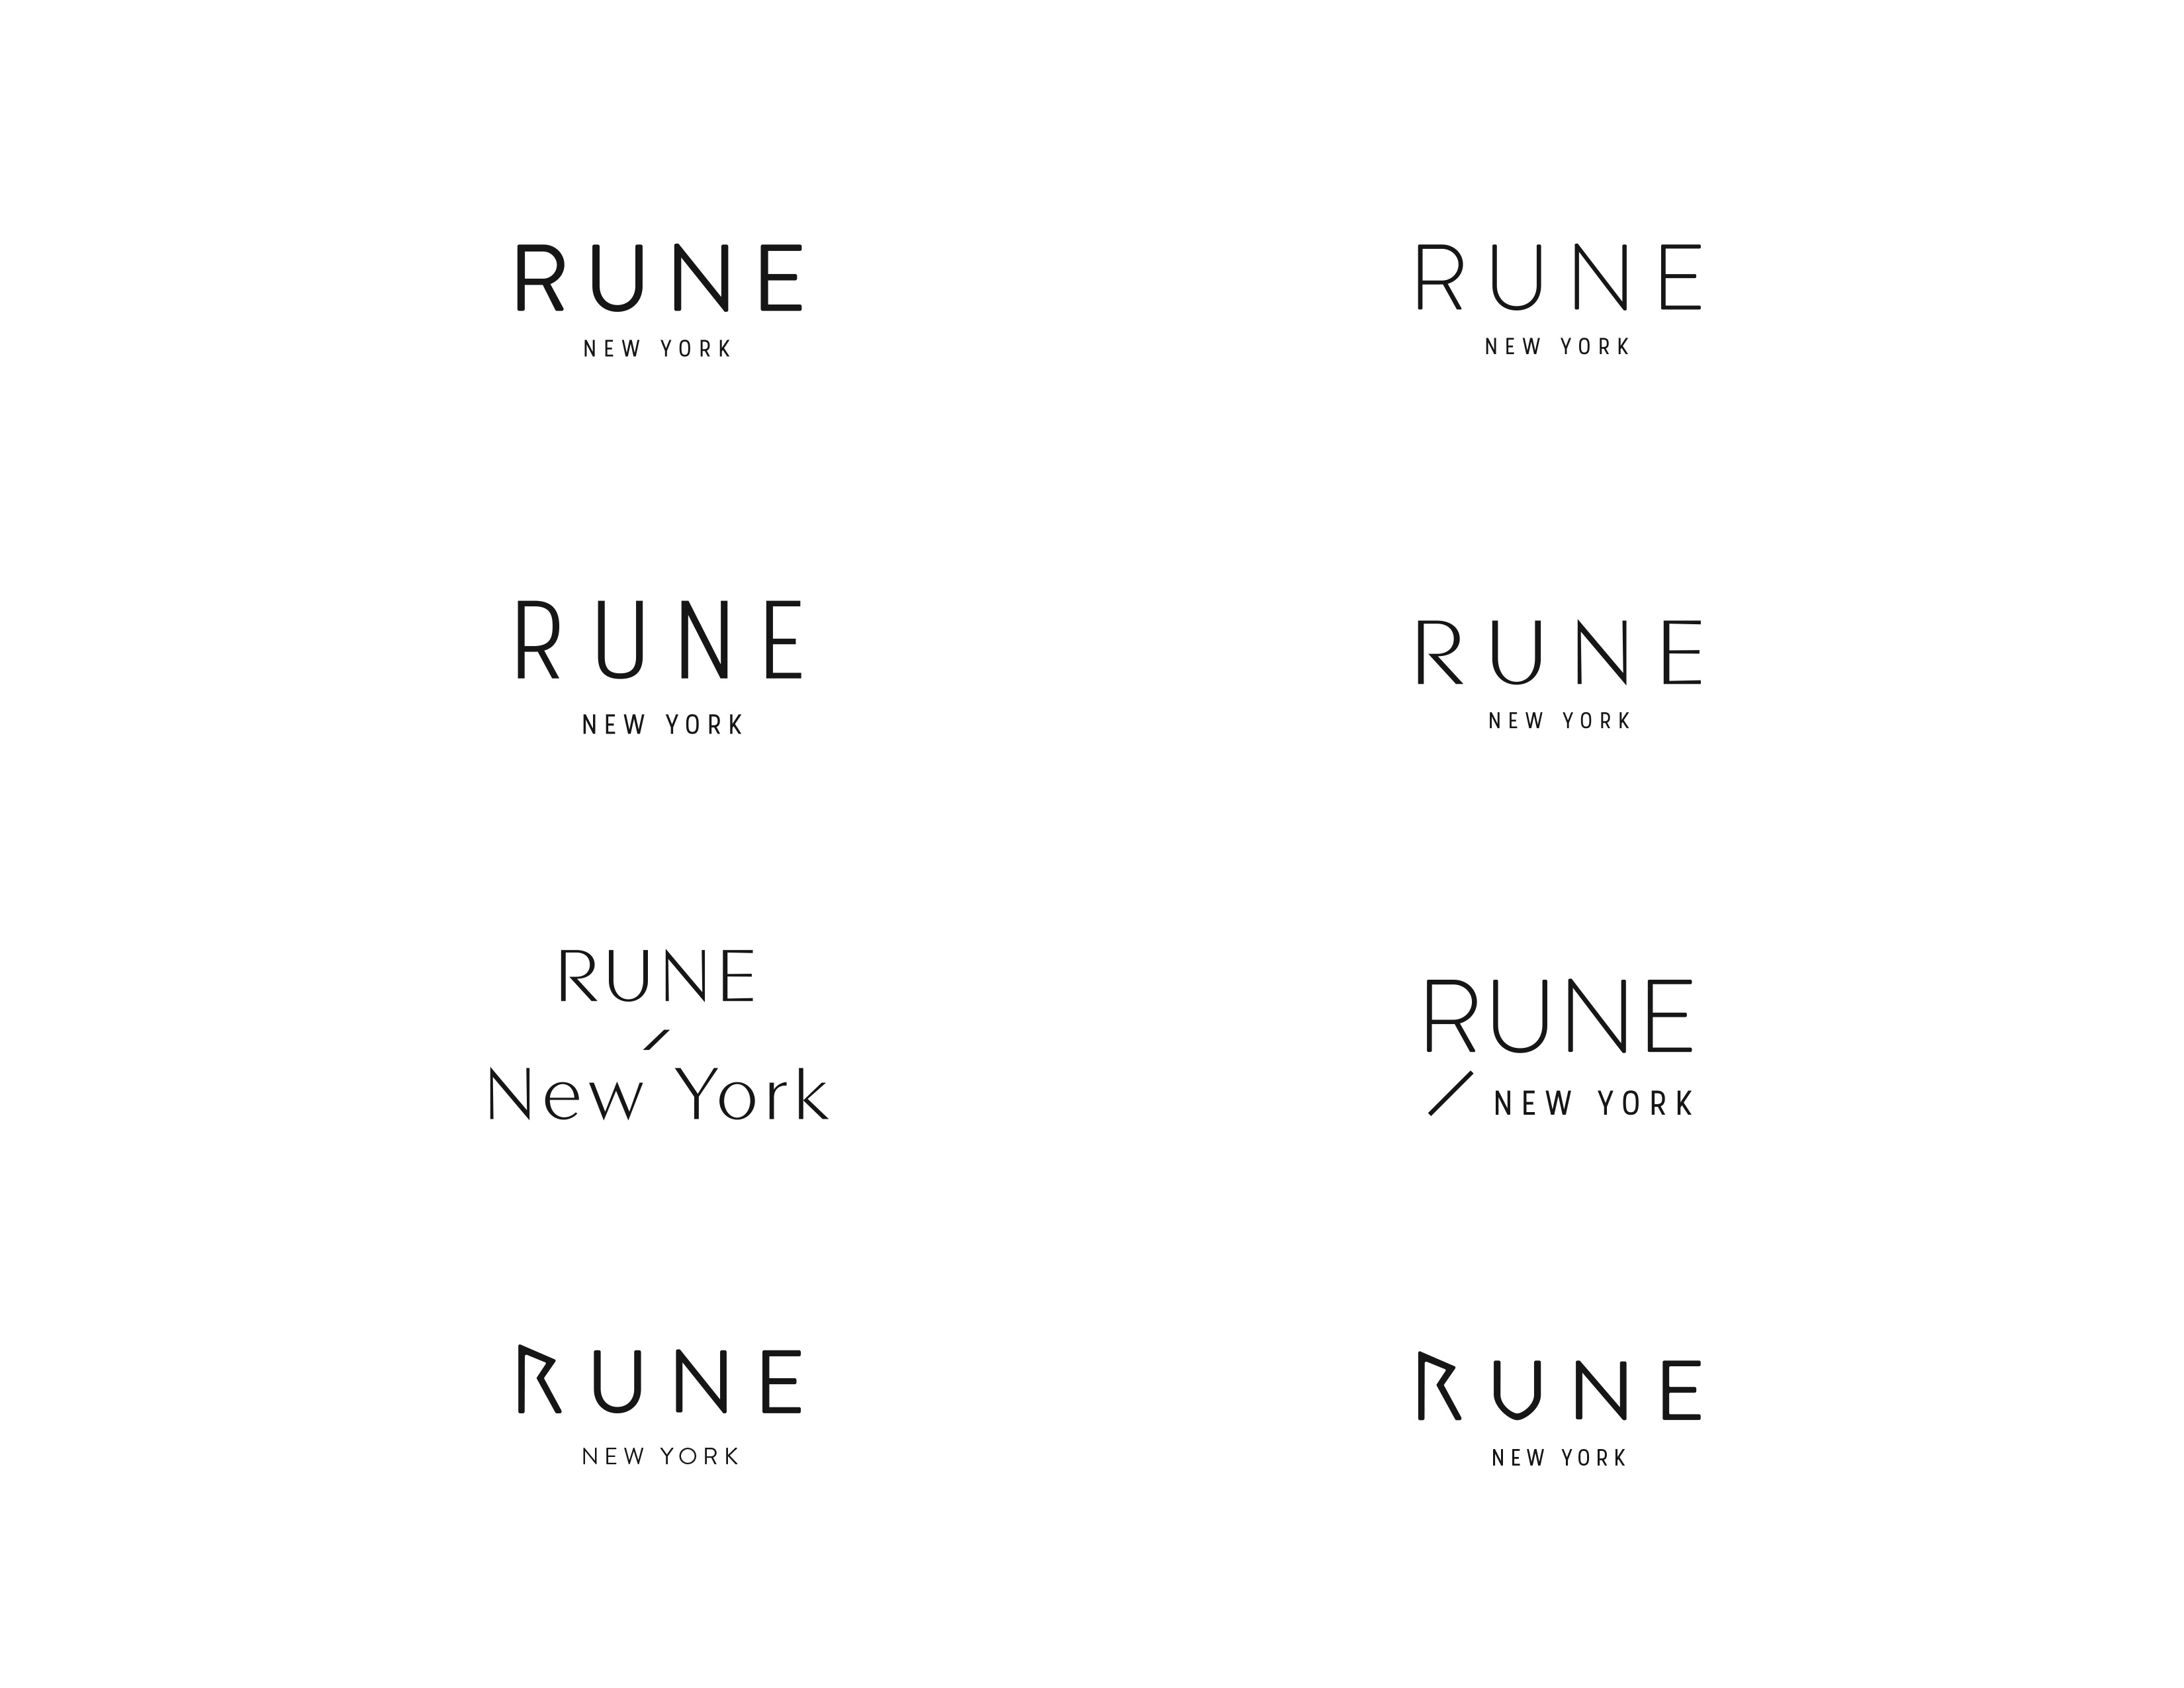 Rune New York Logo Ideas Image